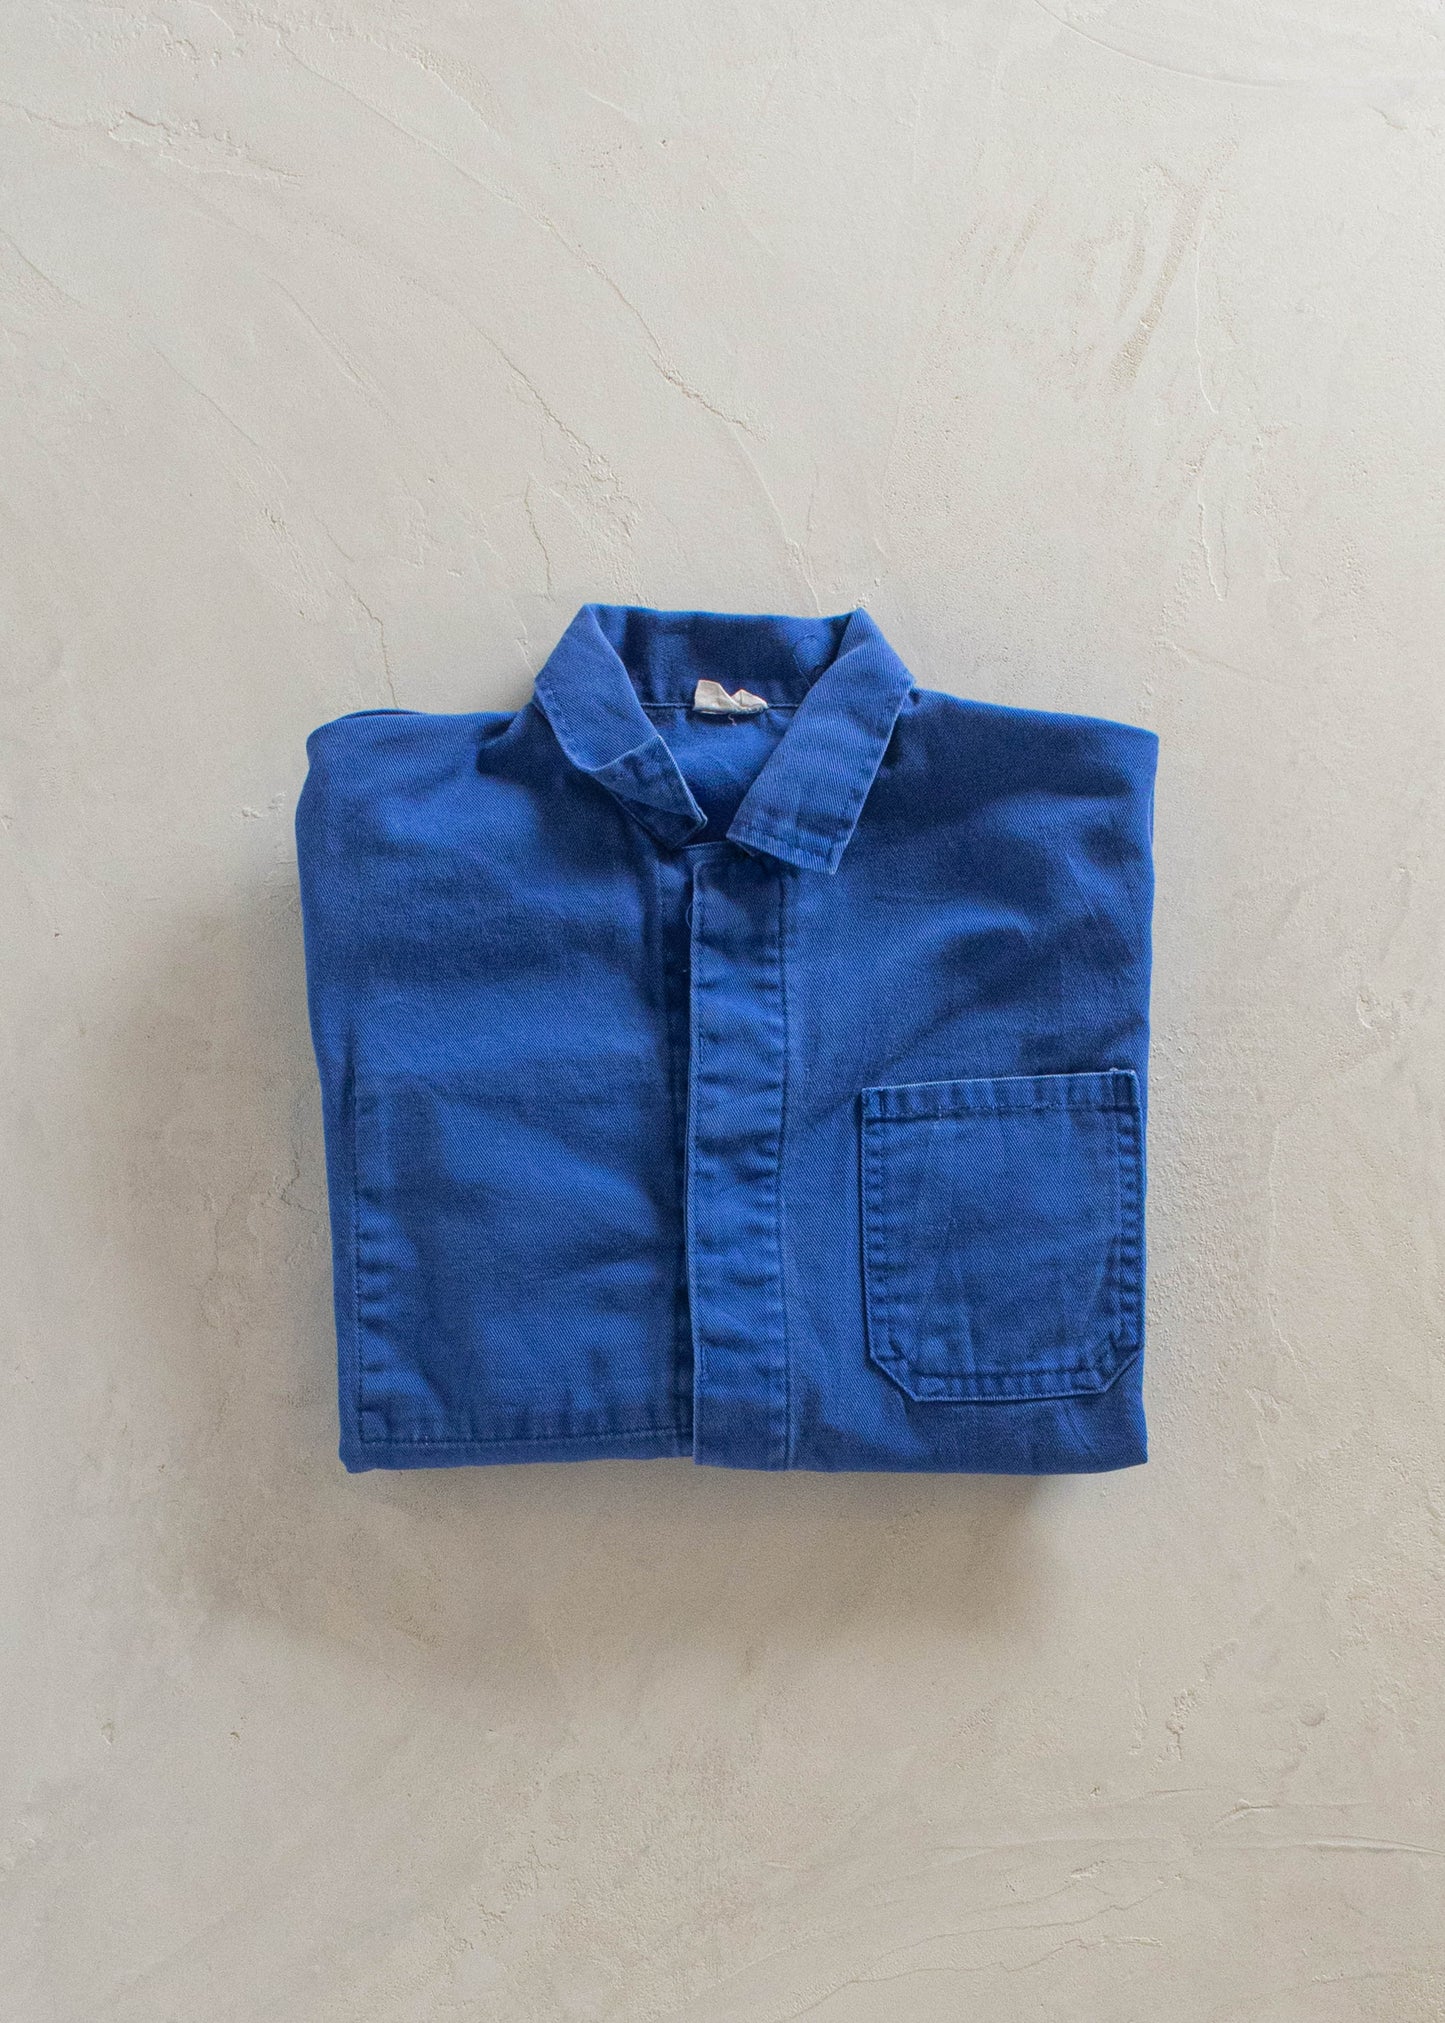 1980s GISS French Workwear Chore Jacket Size XS/S